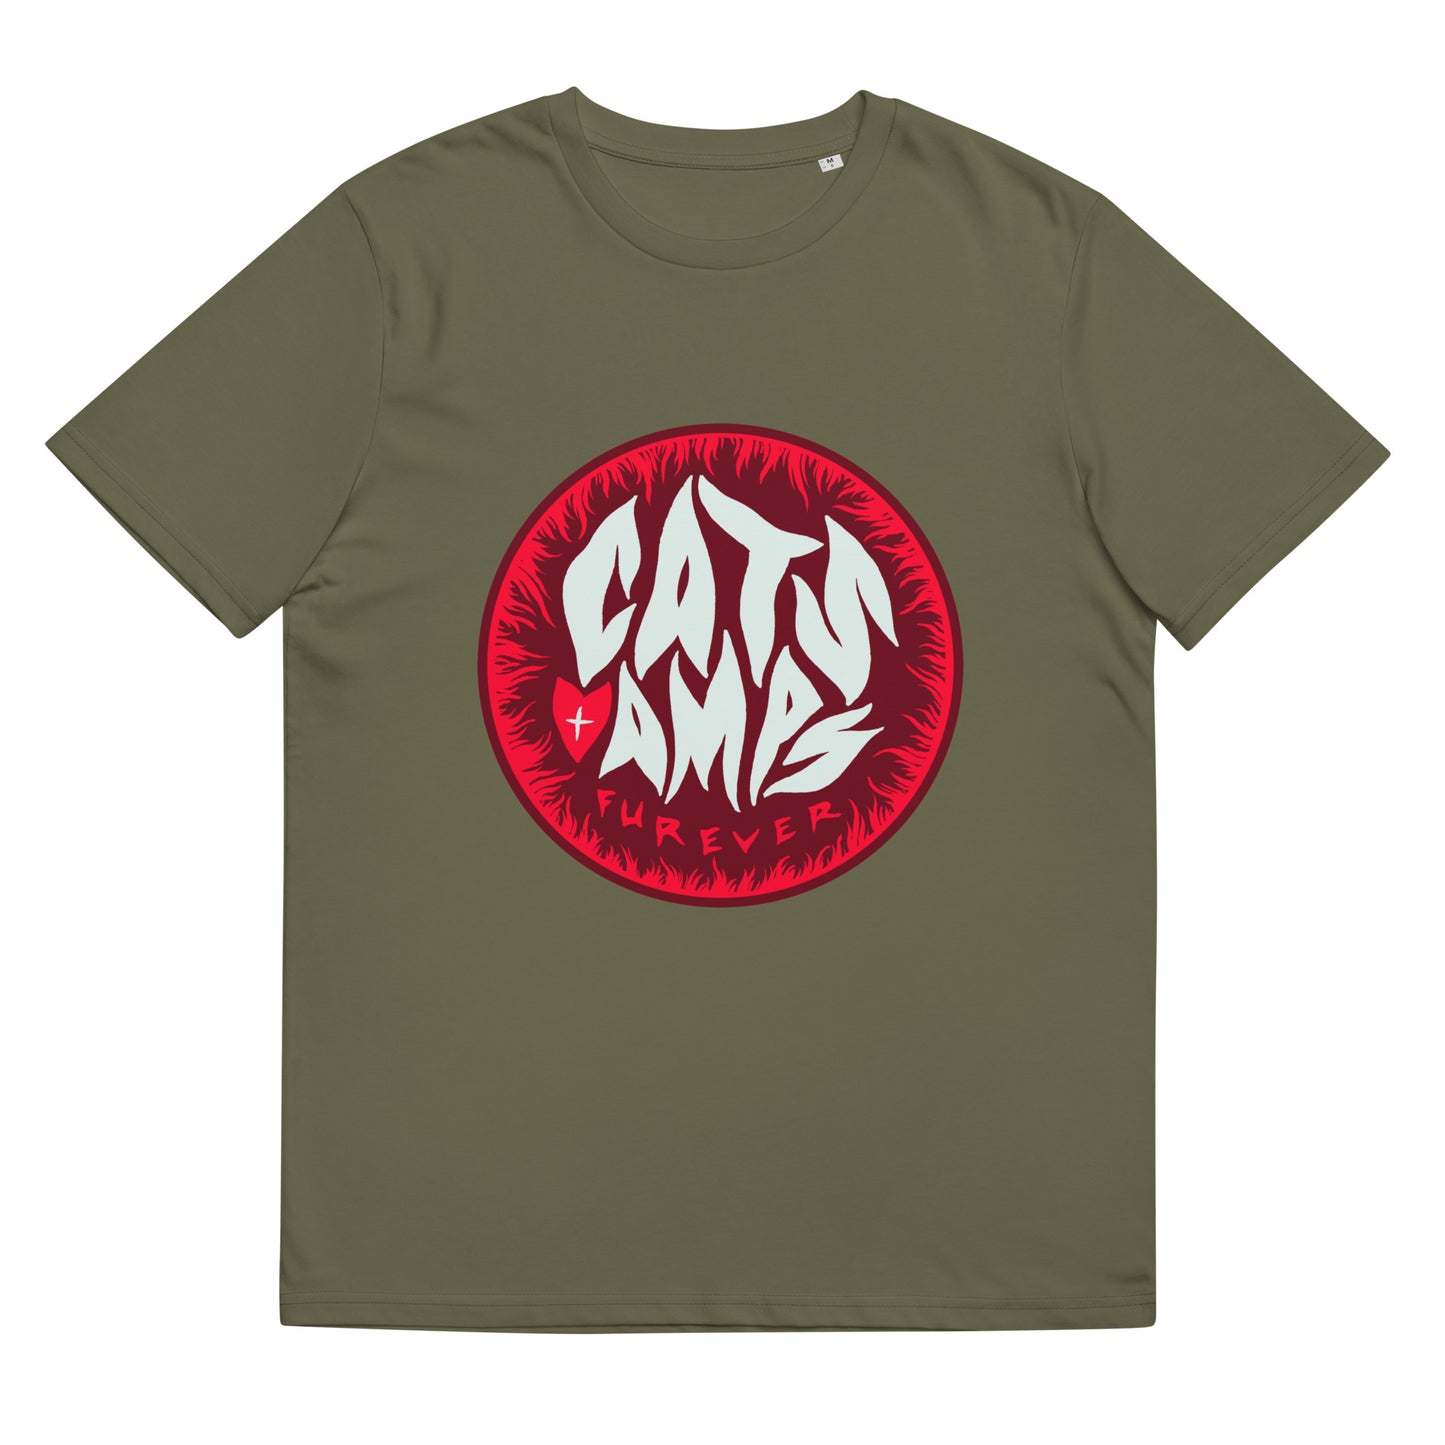 CATS ON AMPS - Valentine Furever - Unisex Organic Cotton T-Shirt